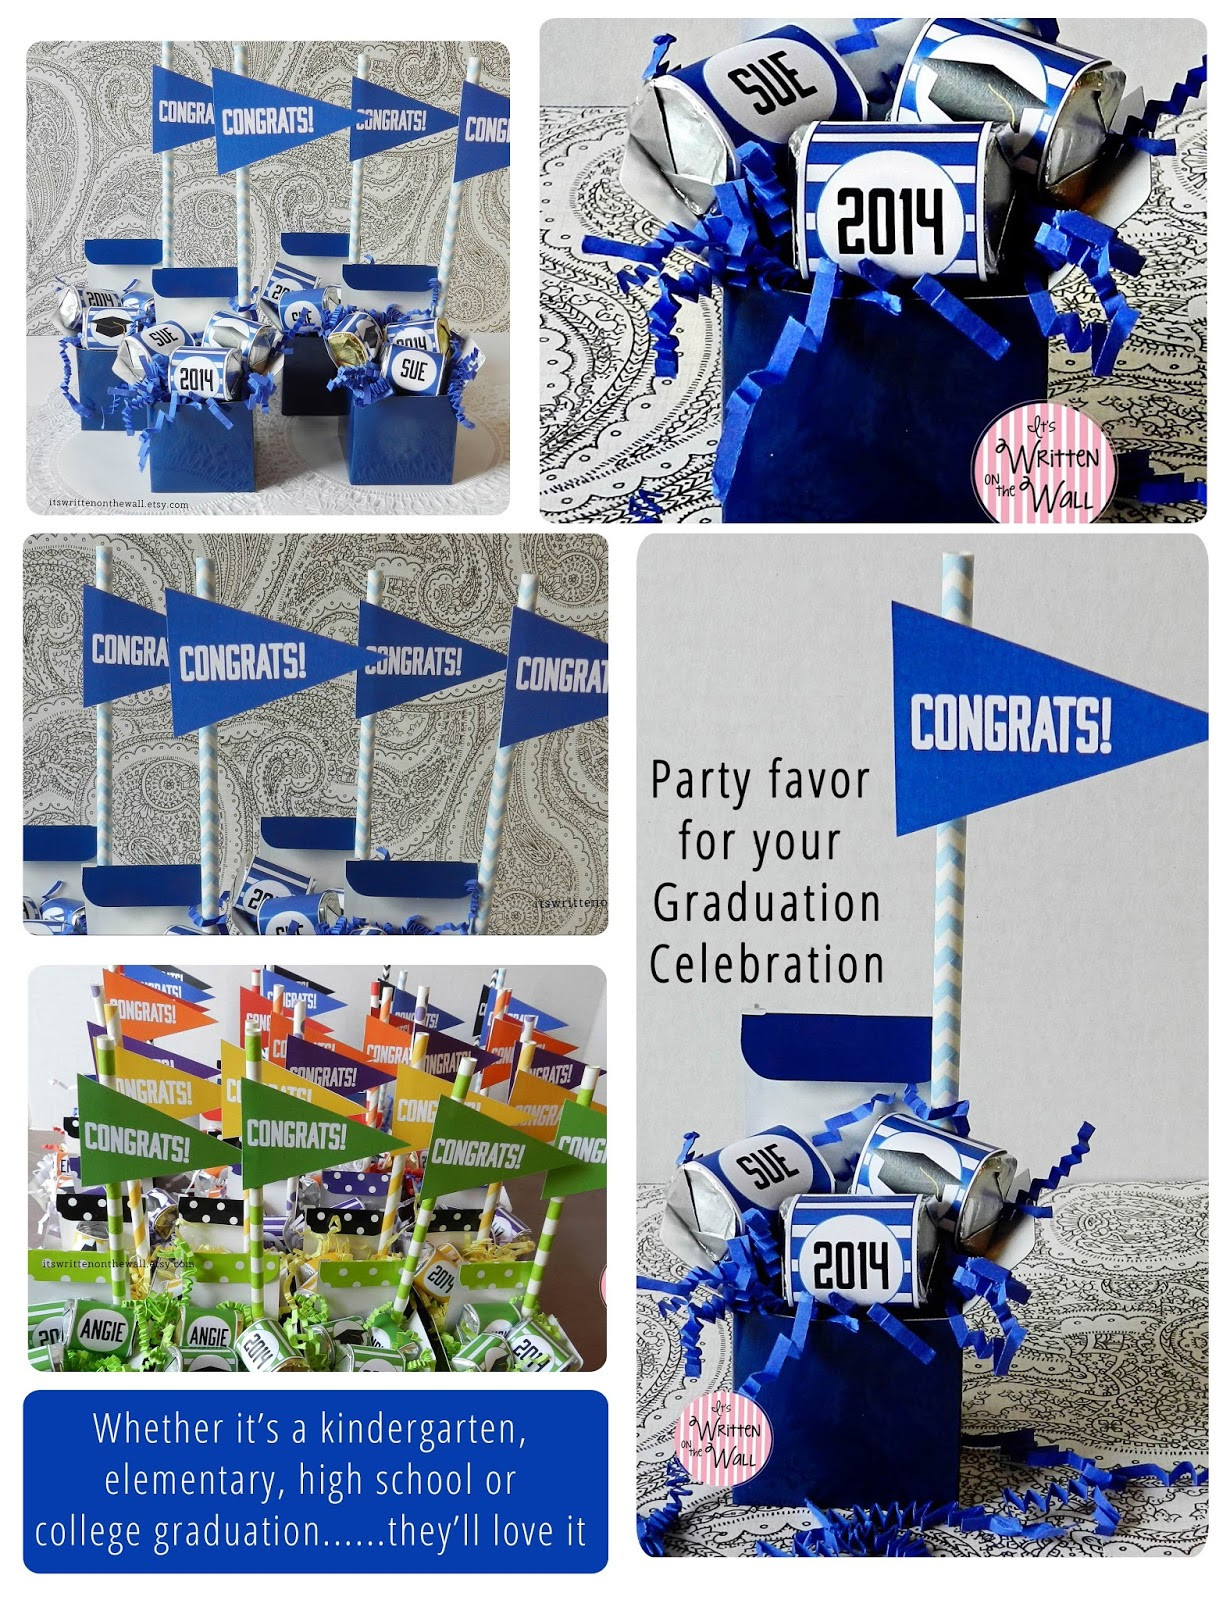 Party Favor Ideas For College Graduation
 Ideas for Graduation Parties Personalized Party Favors